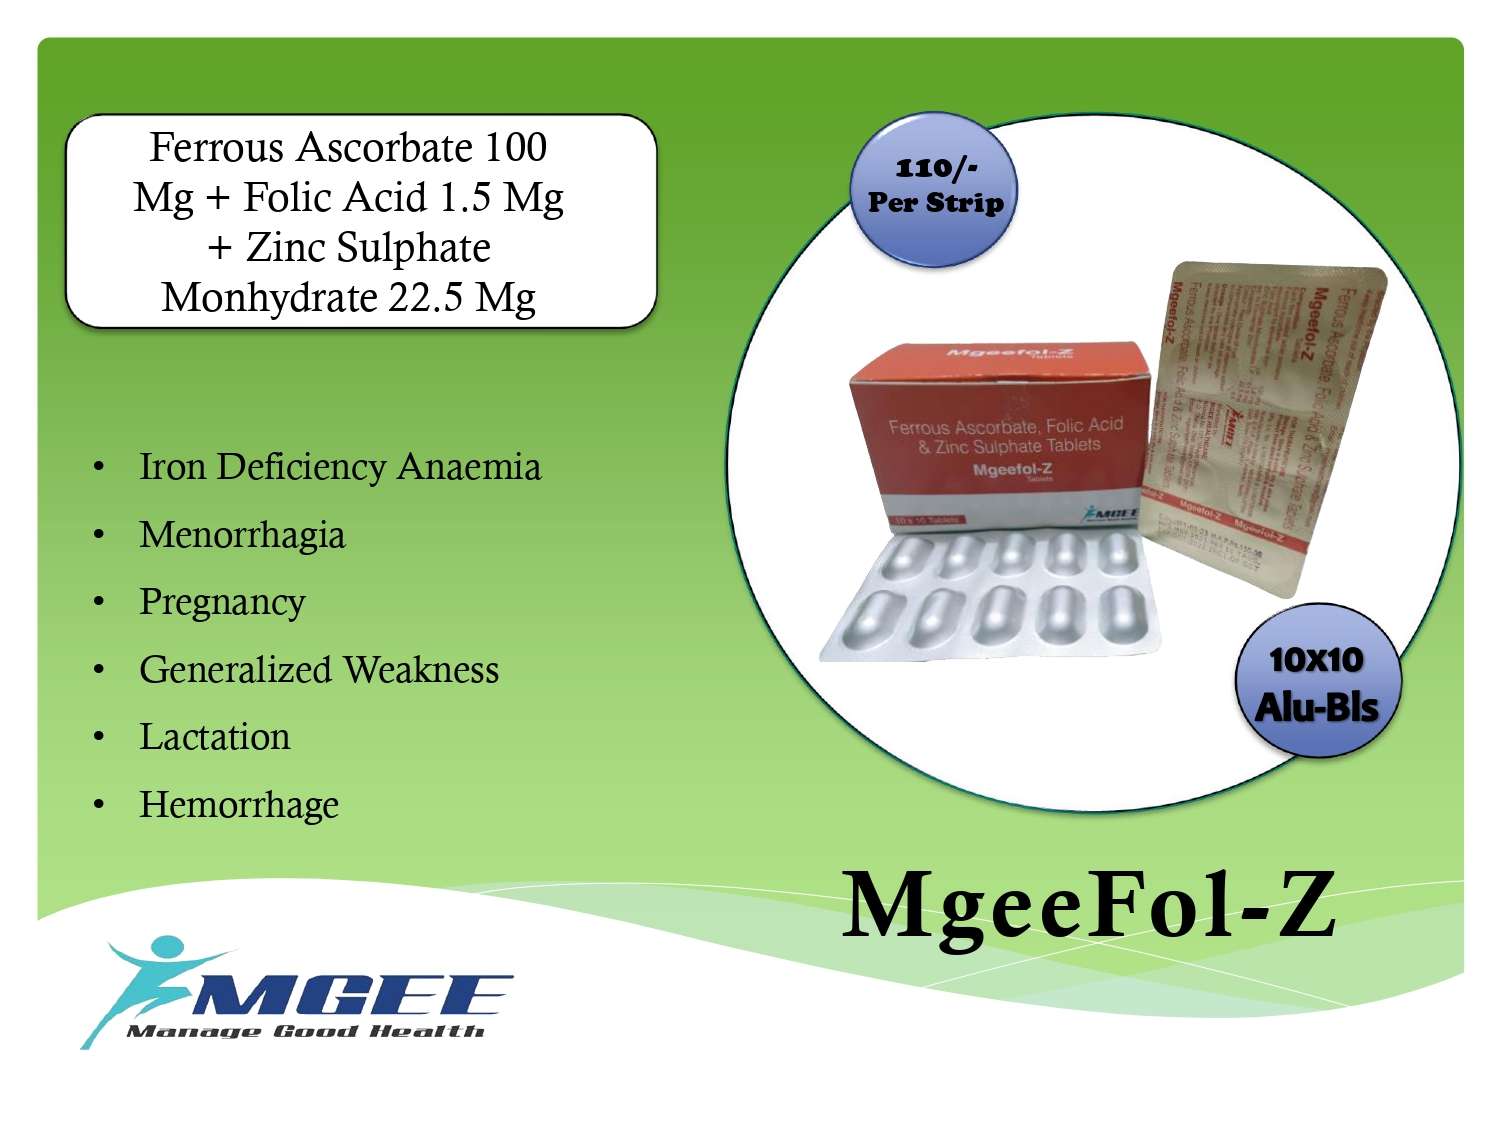 ferrous ascorbate 100mg +folic acid 1.5mg + zinc sulphate 22.5mg